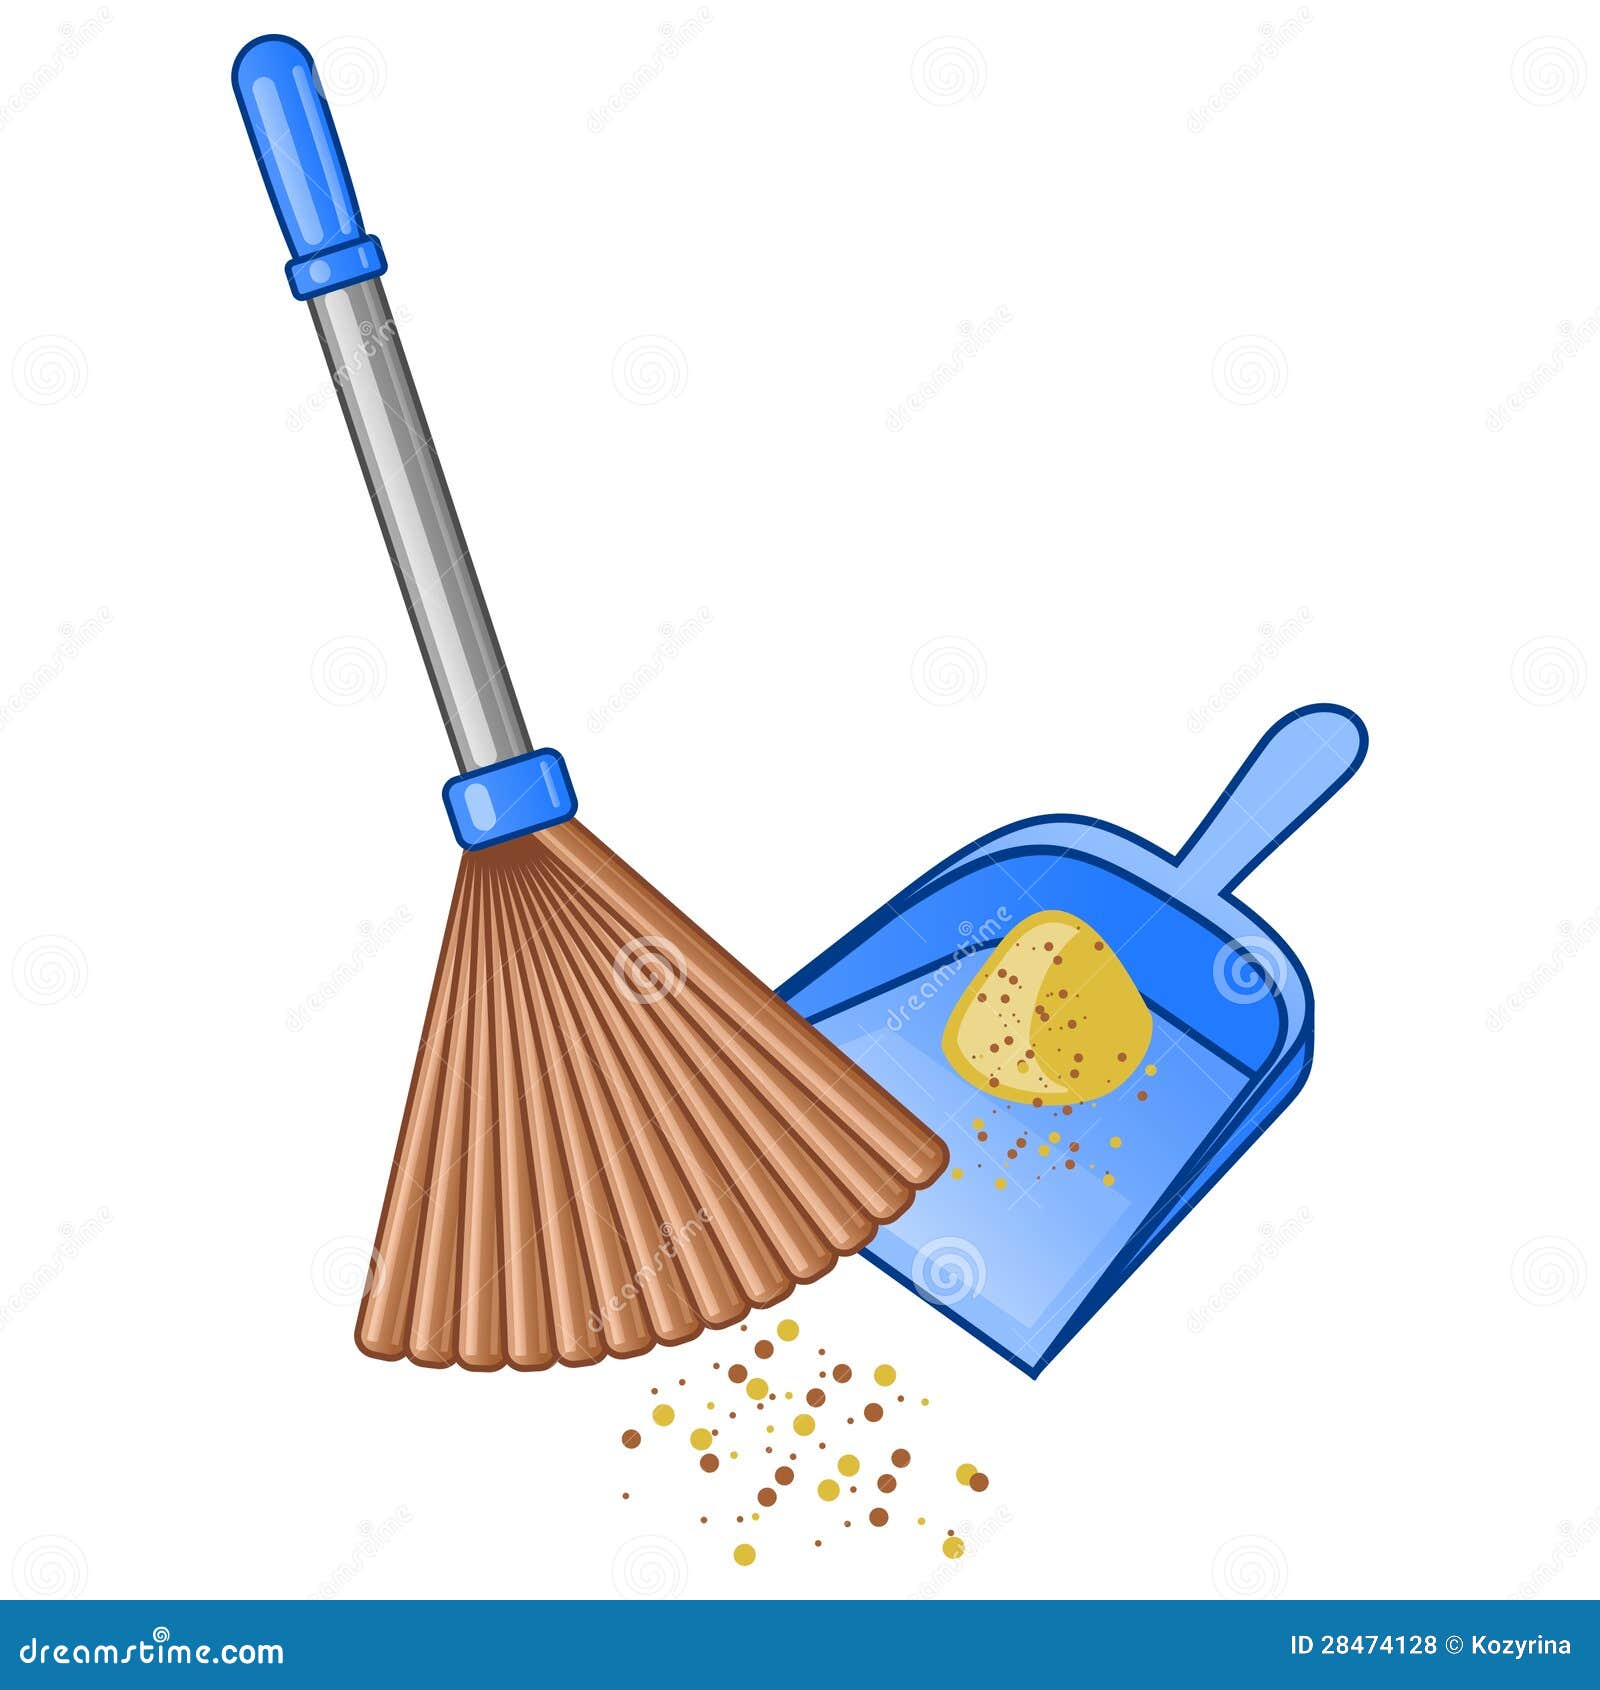 httpsroyalty free stock photos broom dustpan image28474128